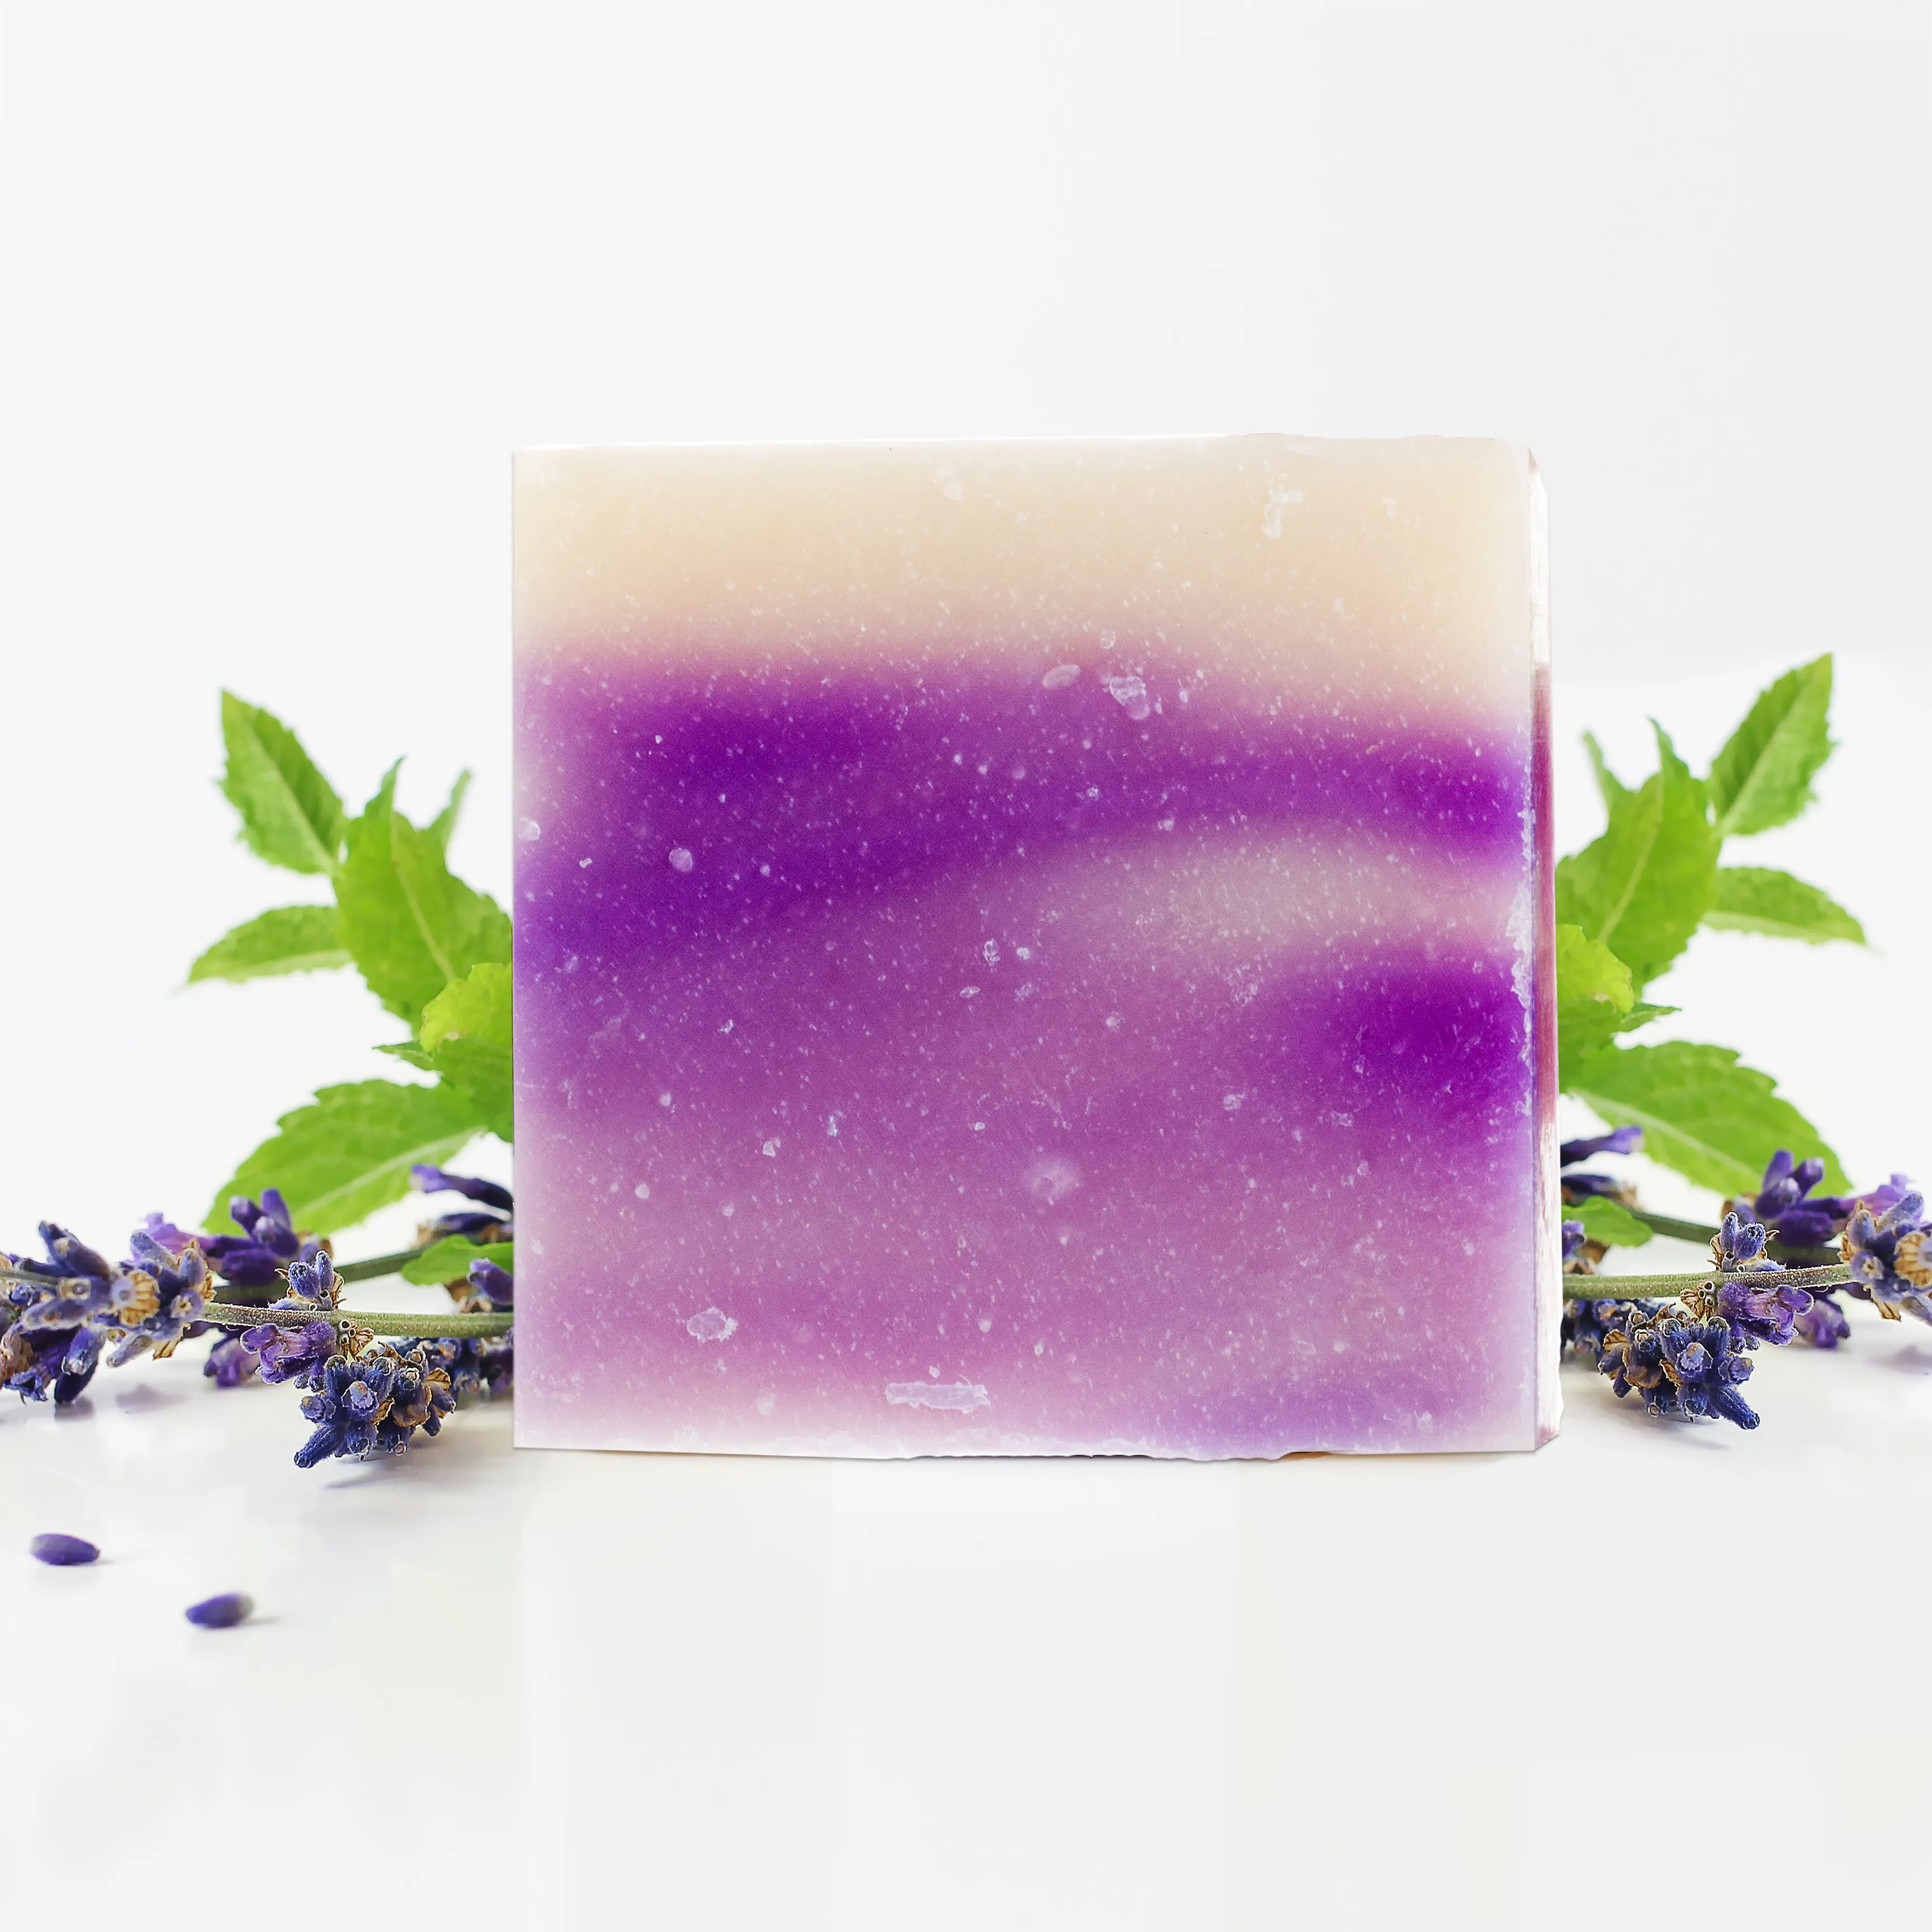 Private Label Handmade Skin Care Körper Gesichts reinigung White ning Natural (extra groß 40% mehr) Dekouke Lavender Soap